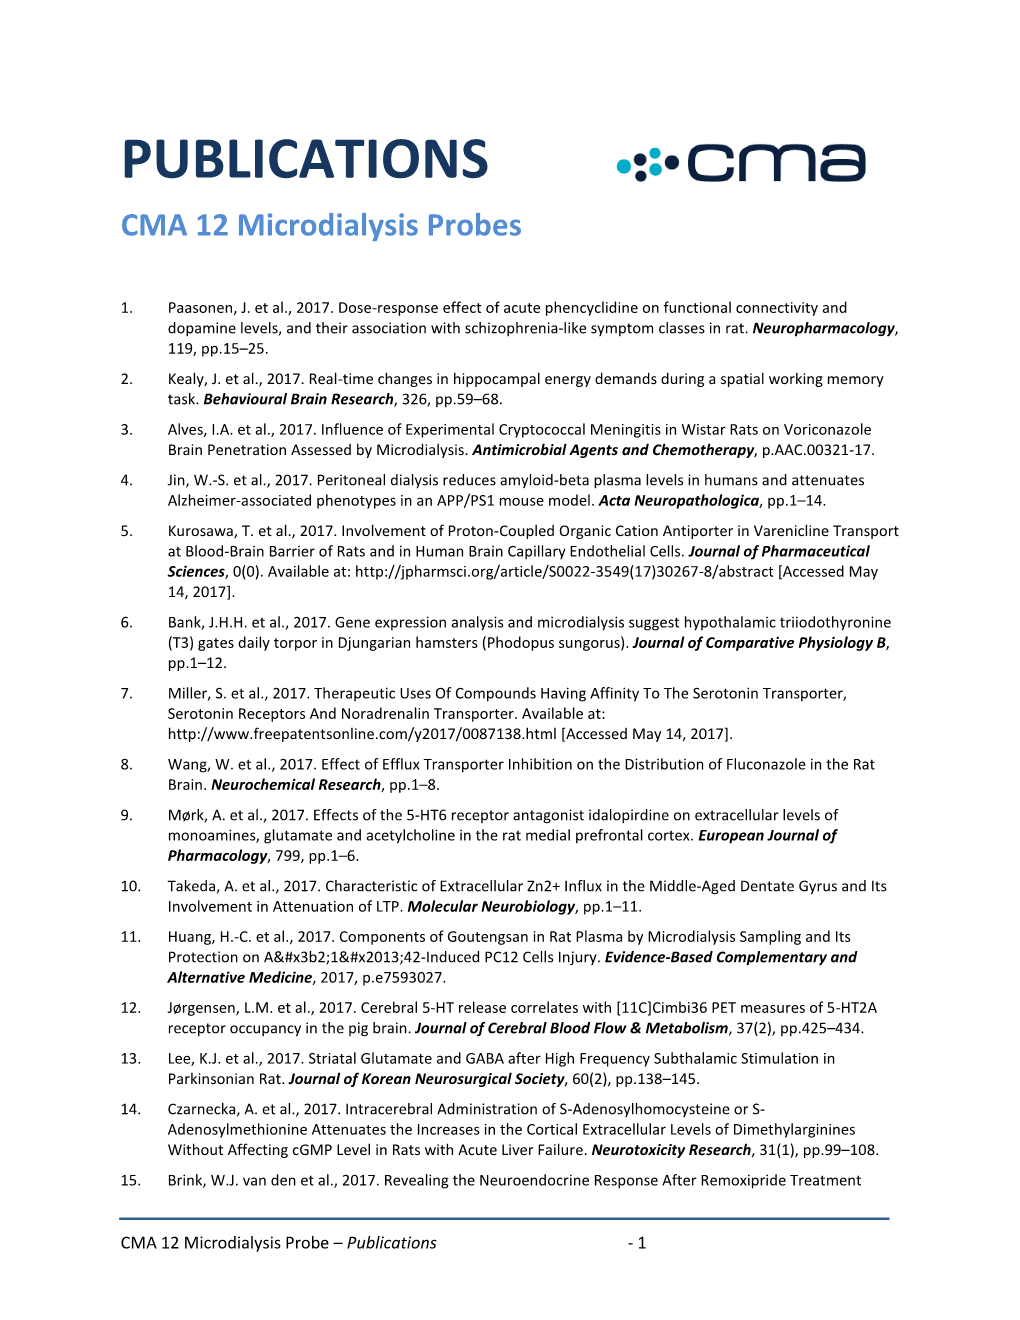 PUBLICATIONS CMA 12 Microdialysis Probes